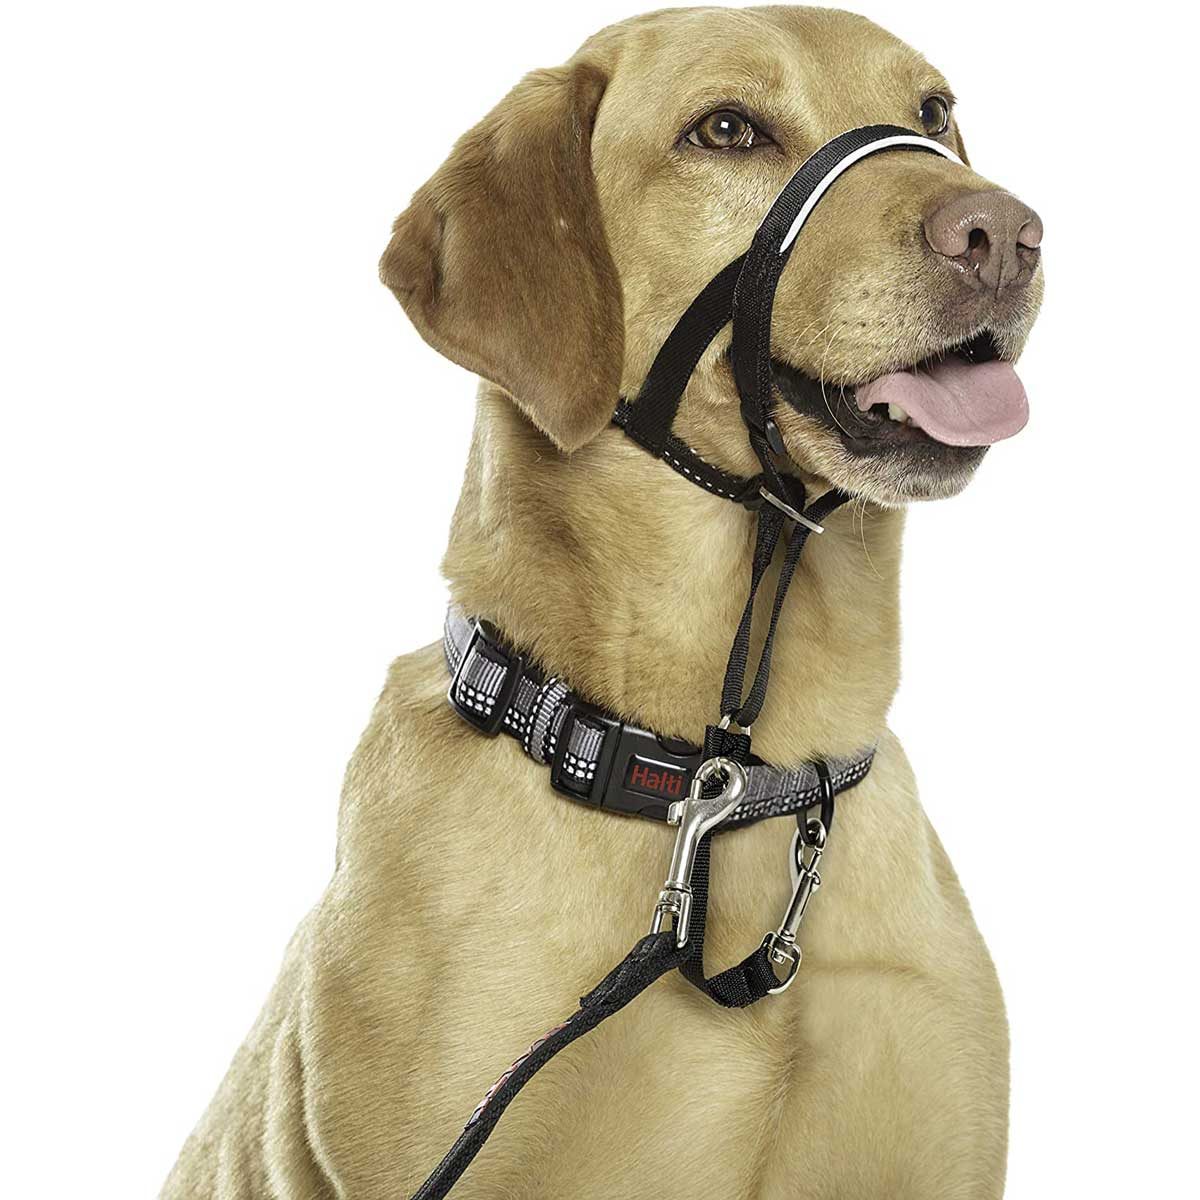 Dog Training Tools - Just The Essentials - Essential Training Tools